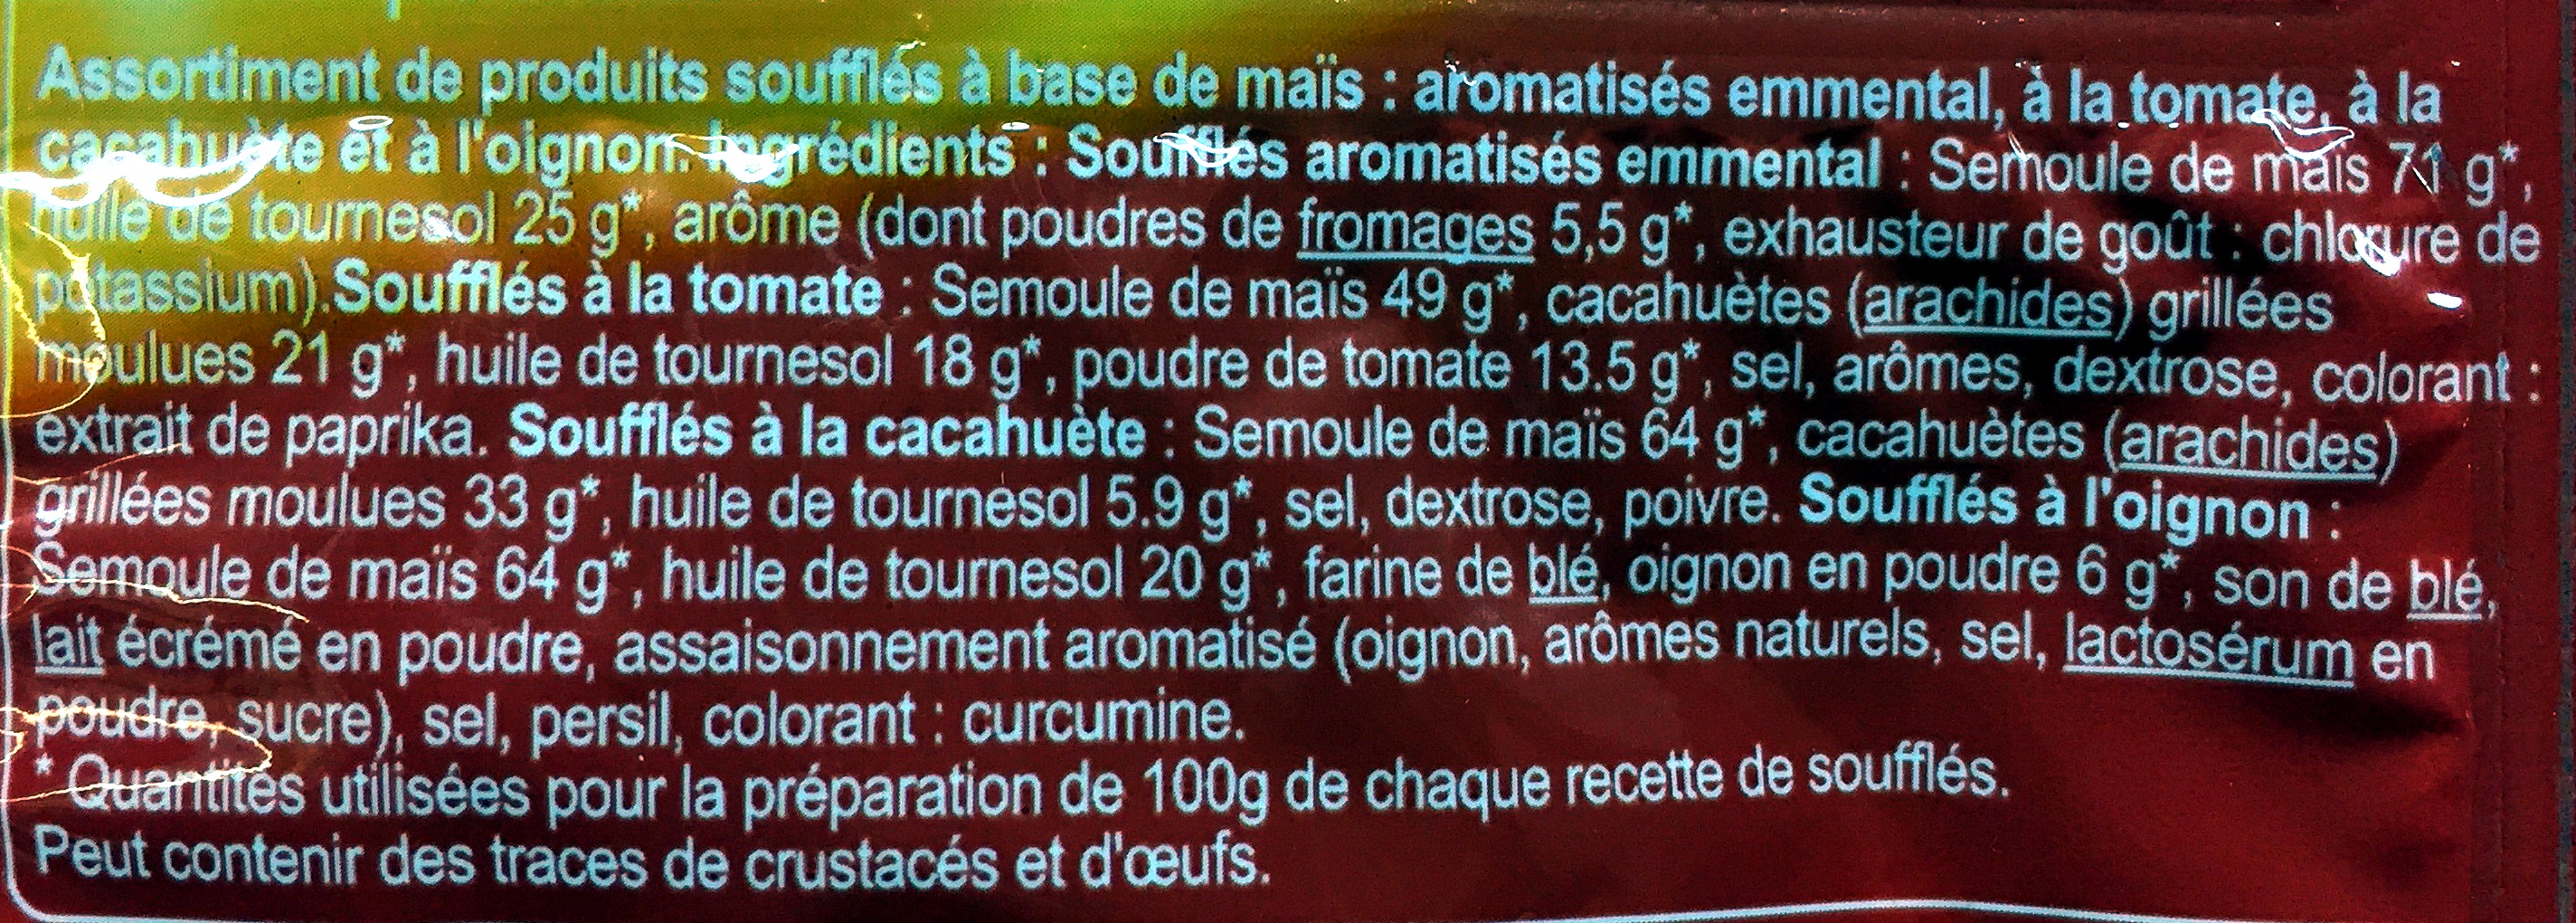 Assortiment de soufflés - Ingredients - fr